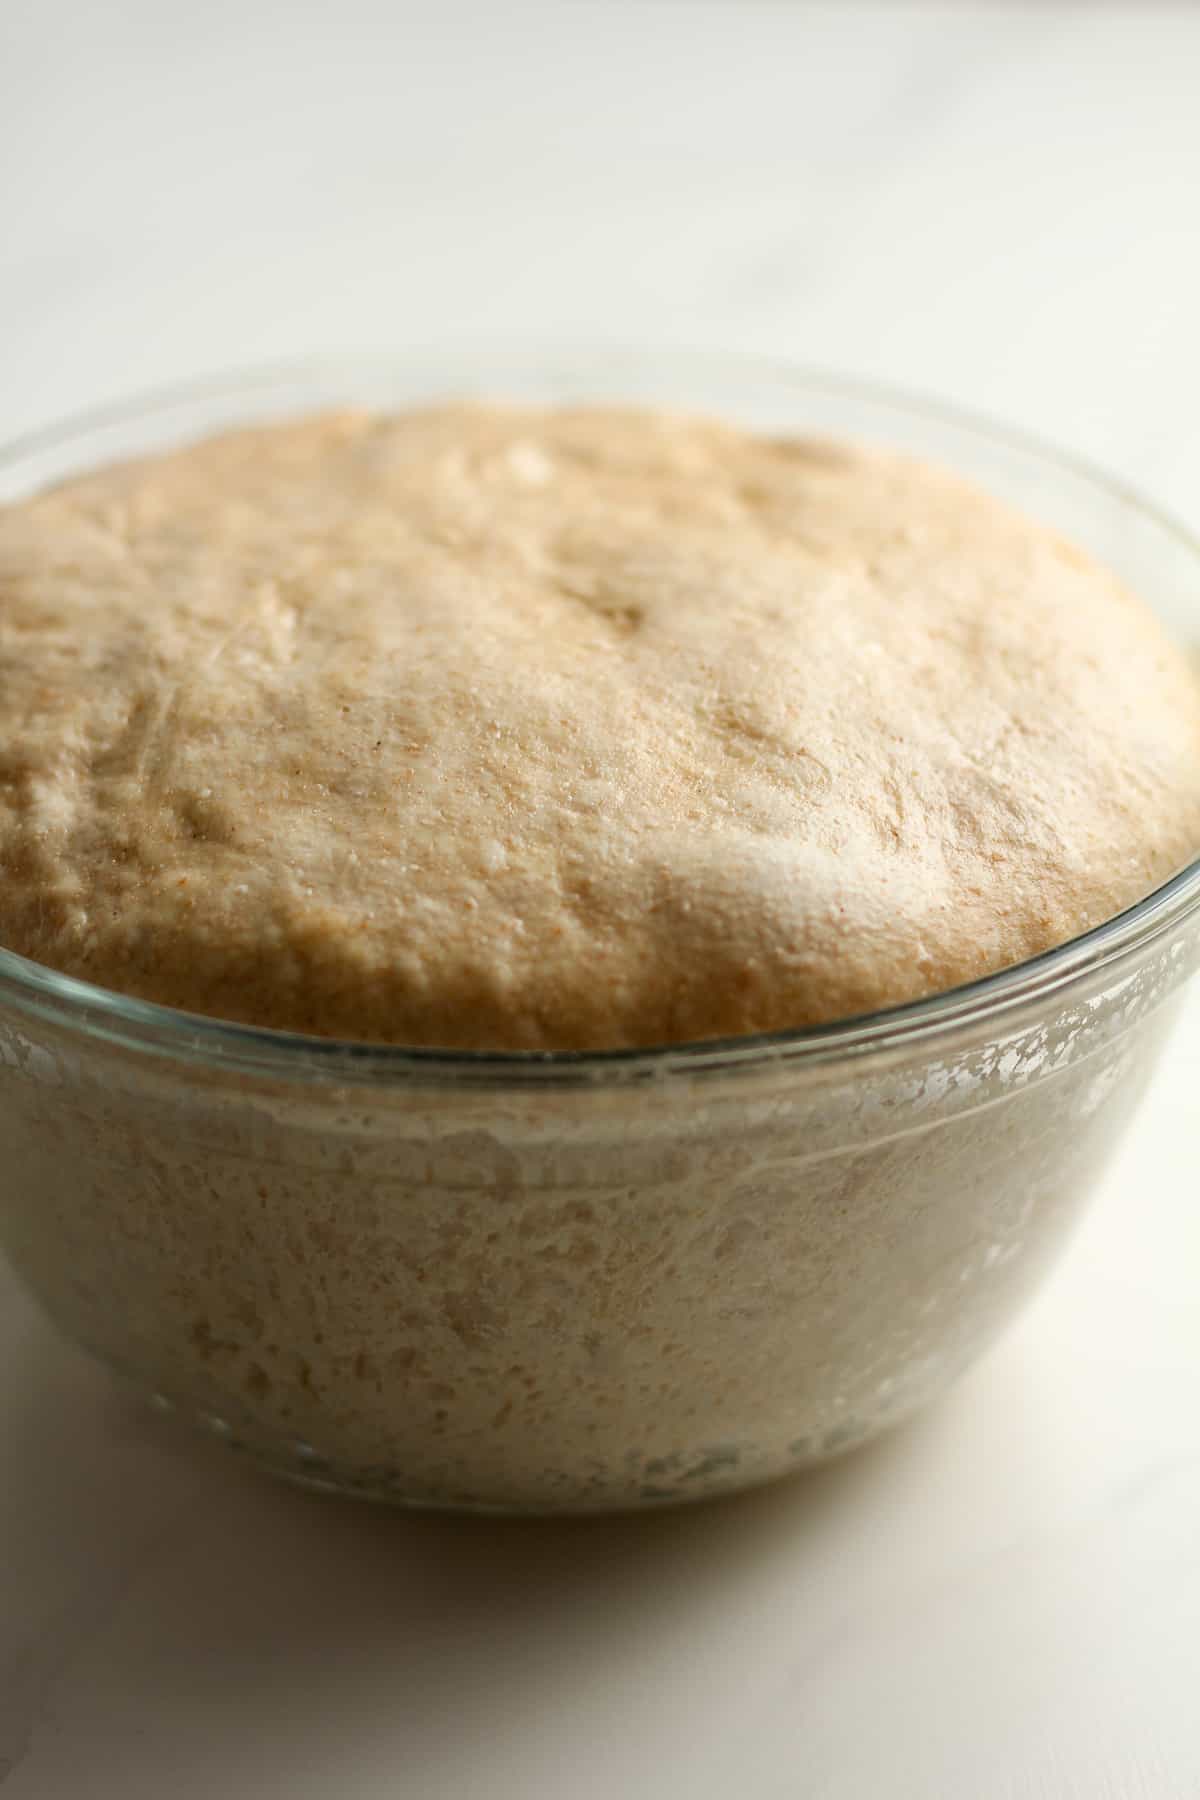 Side shot of a bowl of raised sourdough bread.